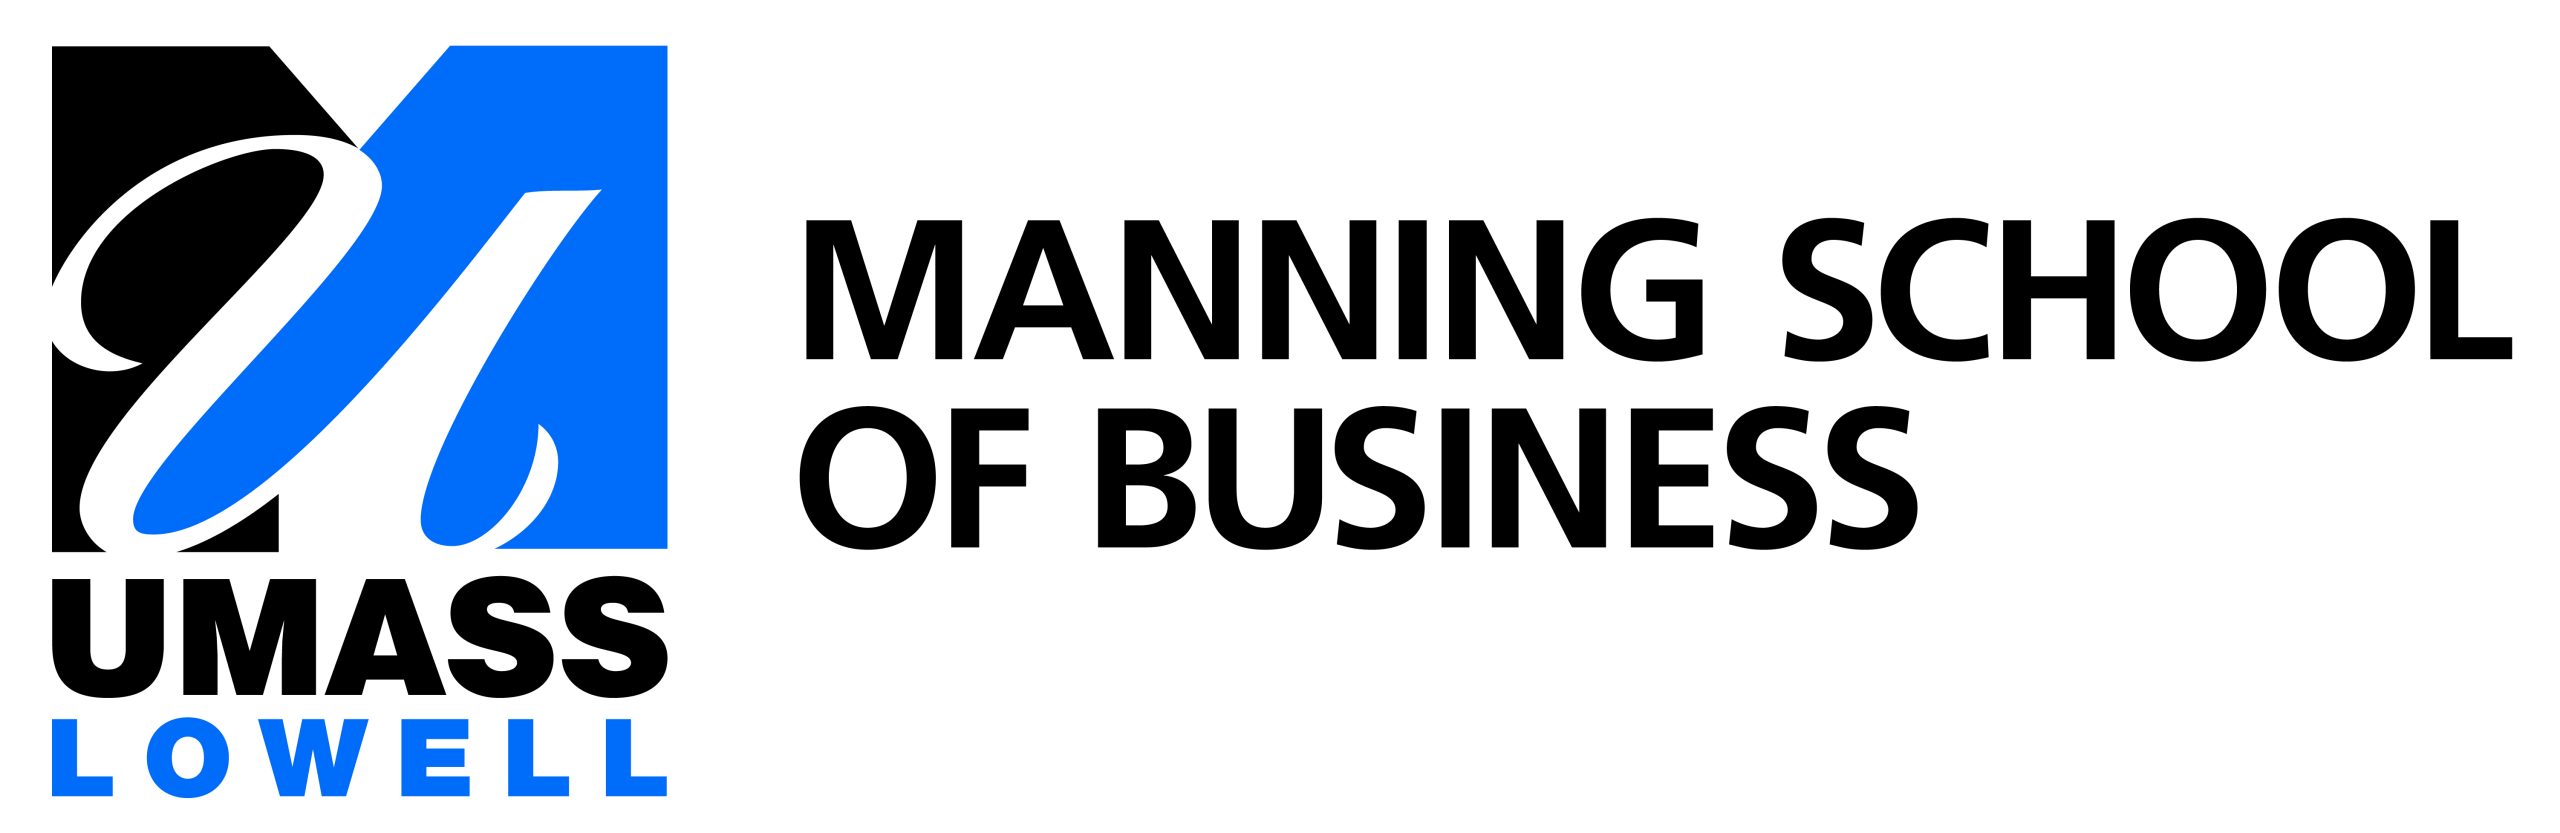 UMass Manning School logo